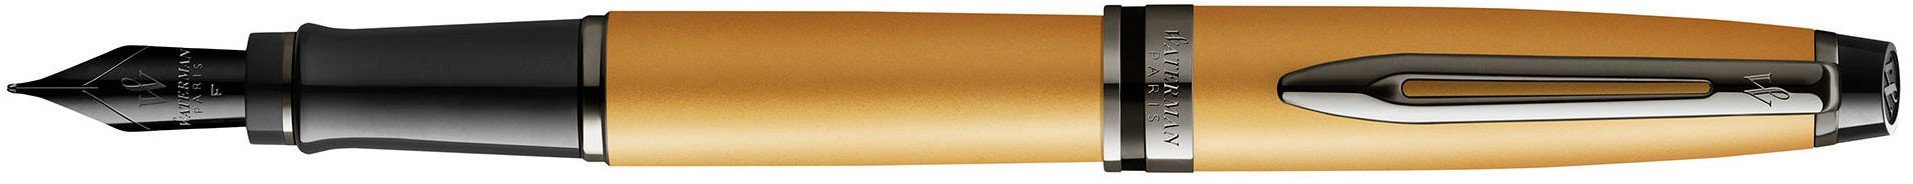 Ручка перьевая Waterman Expert DeLuxe Metallic Gold RT F перо сталь